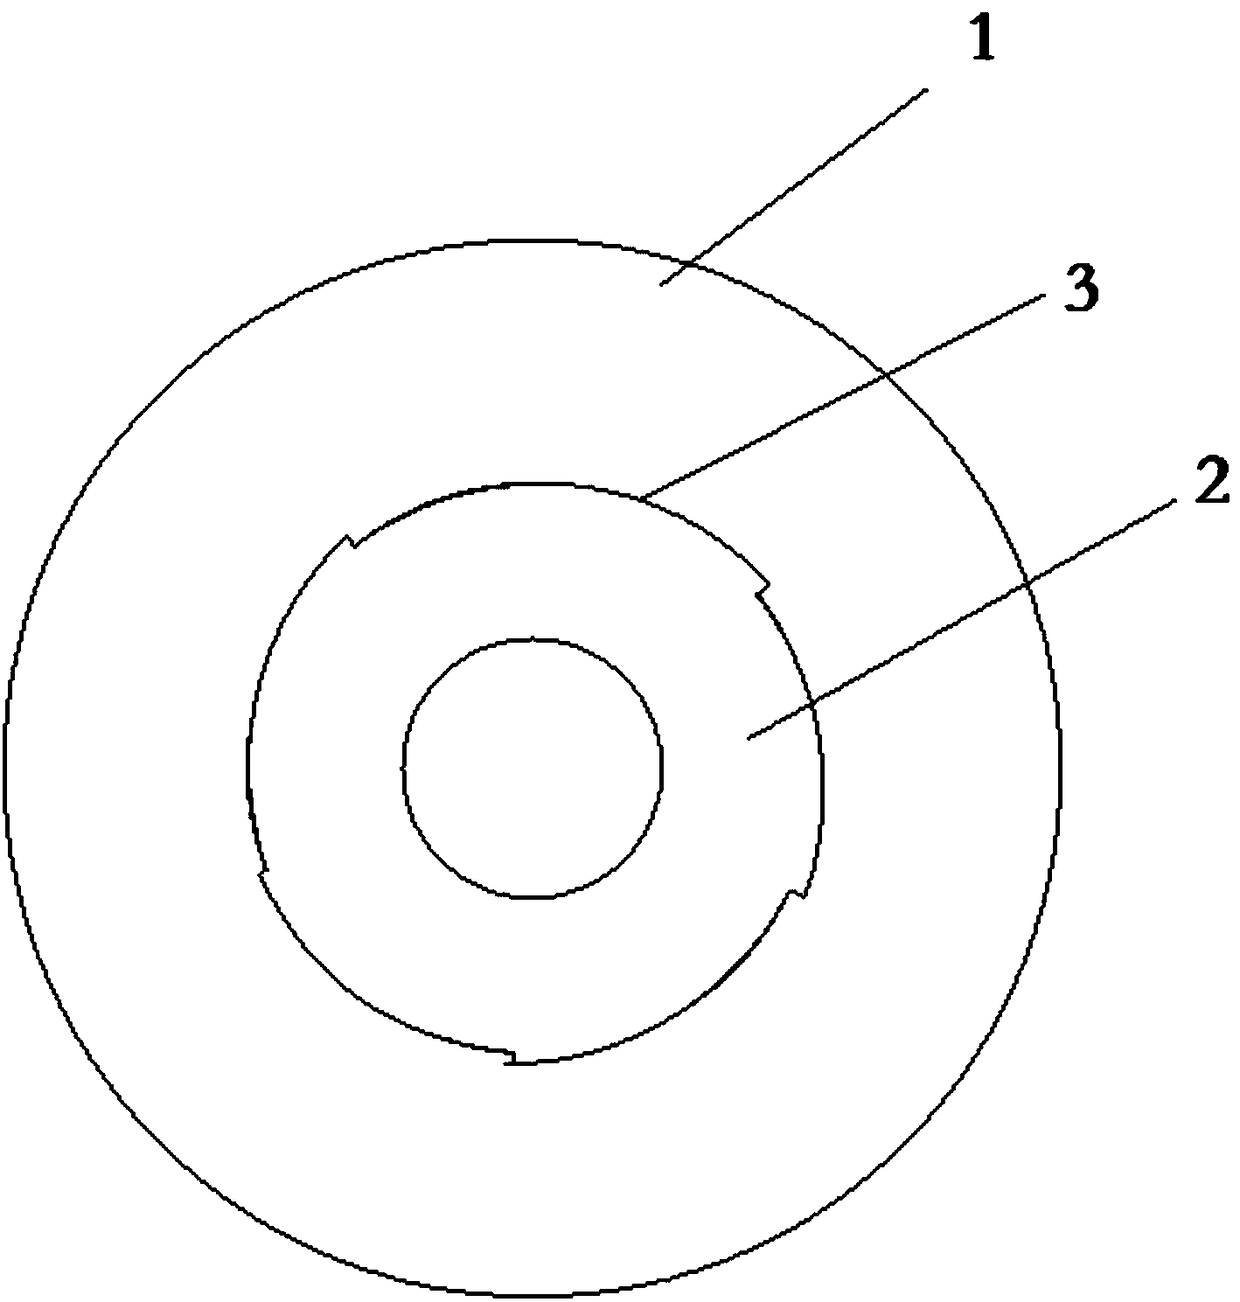 Archimedes spiral end face thrust sliding plate